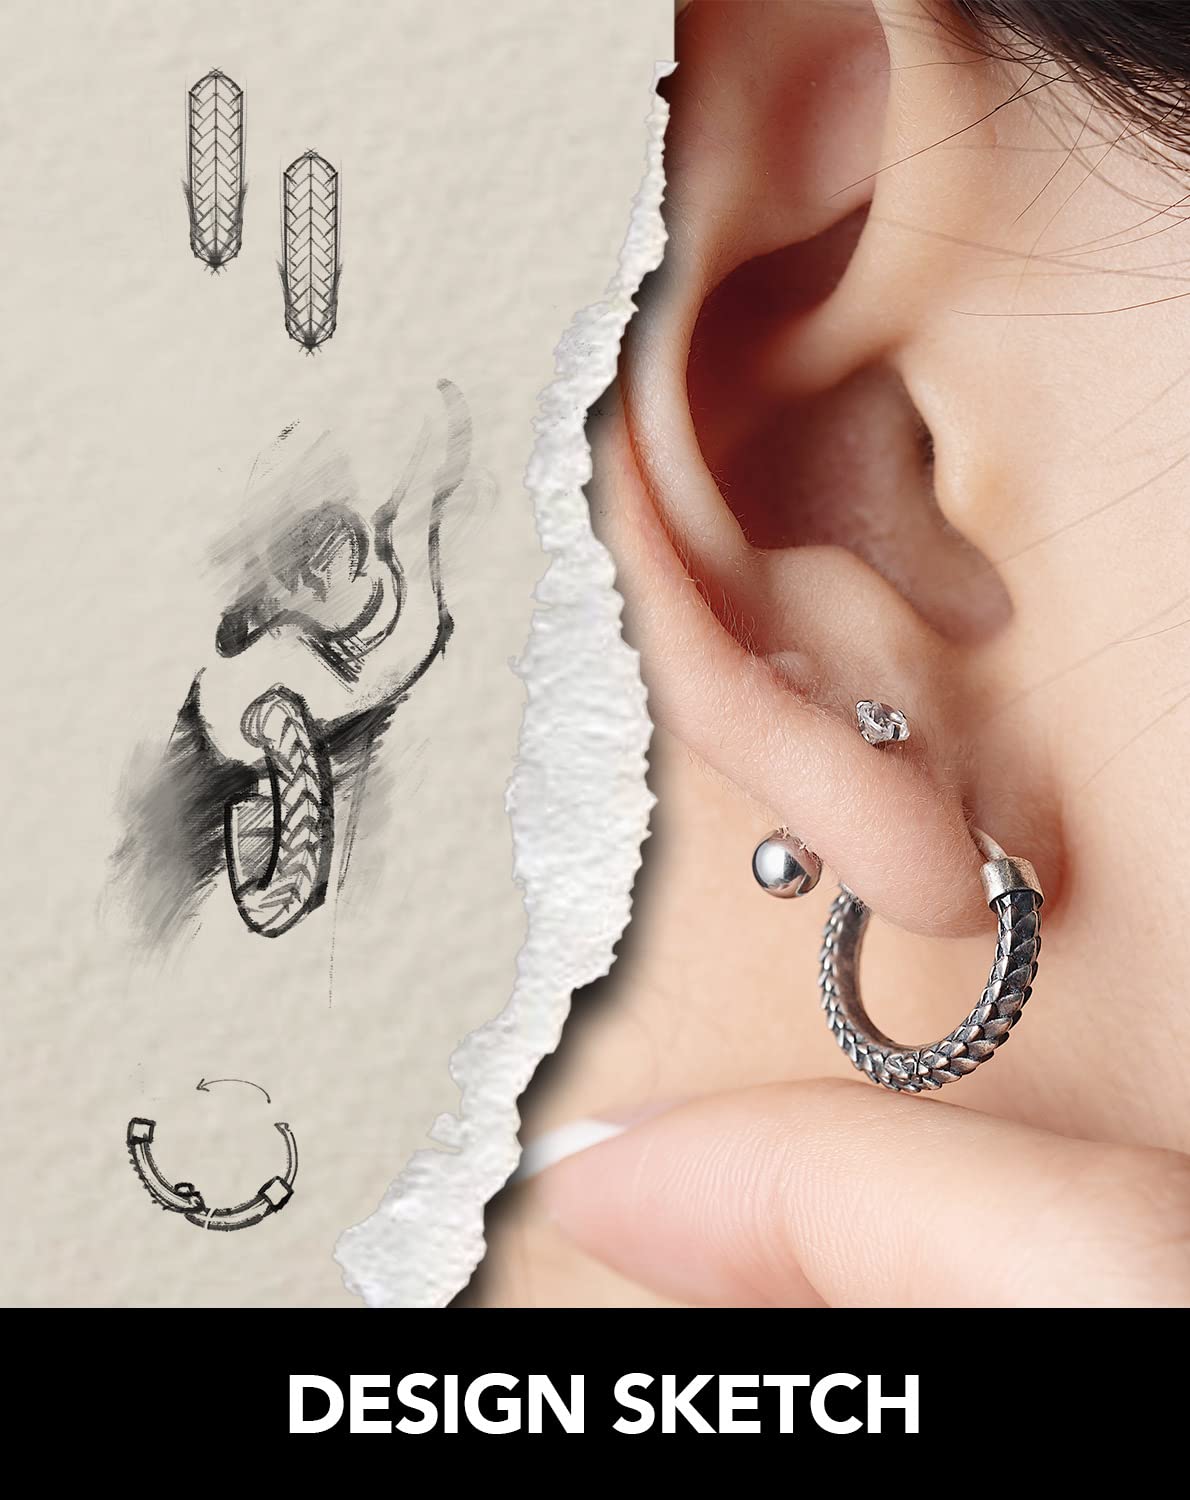 COPPERTIST.WU Snake Skin Earrings Sterling Silver Earrings for Women Men Girls Small Hoop Hypoallergenic, Pair